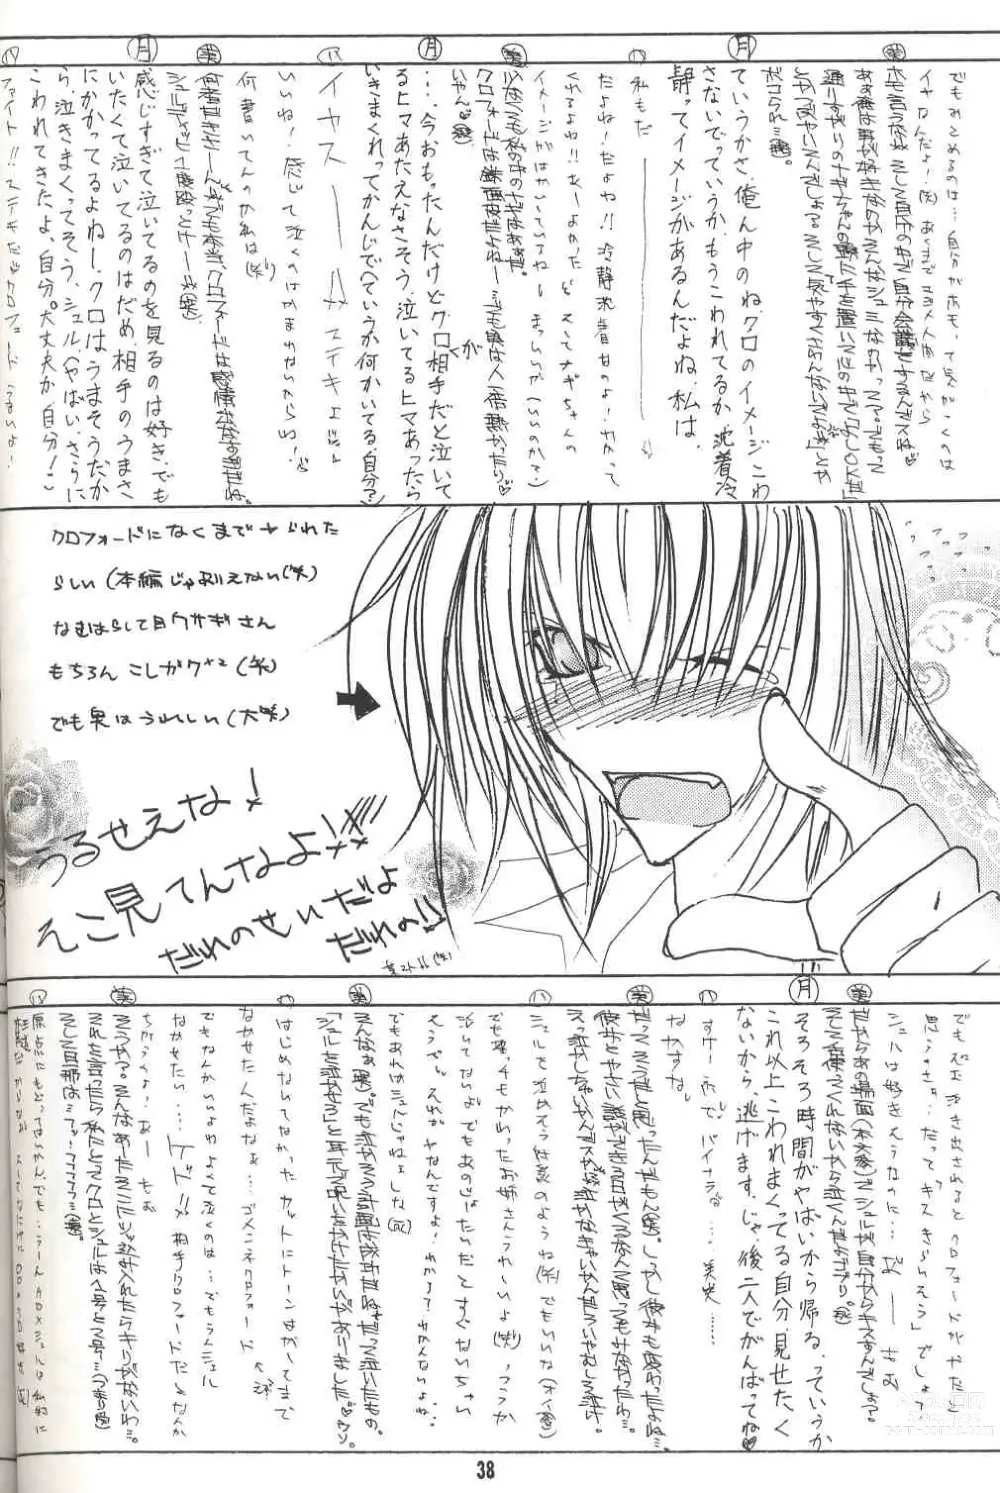 Page 37 of doujinshi Sentimental